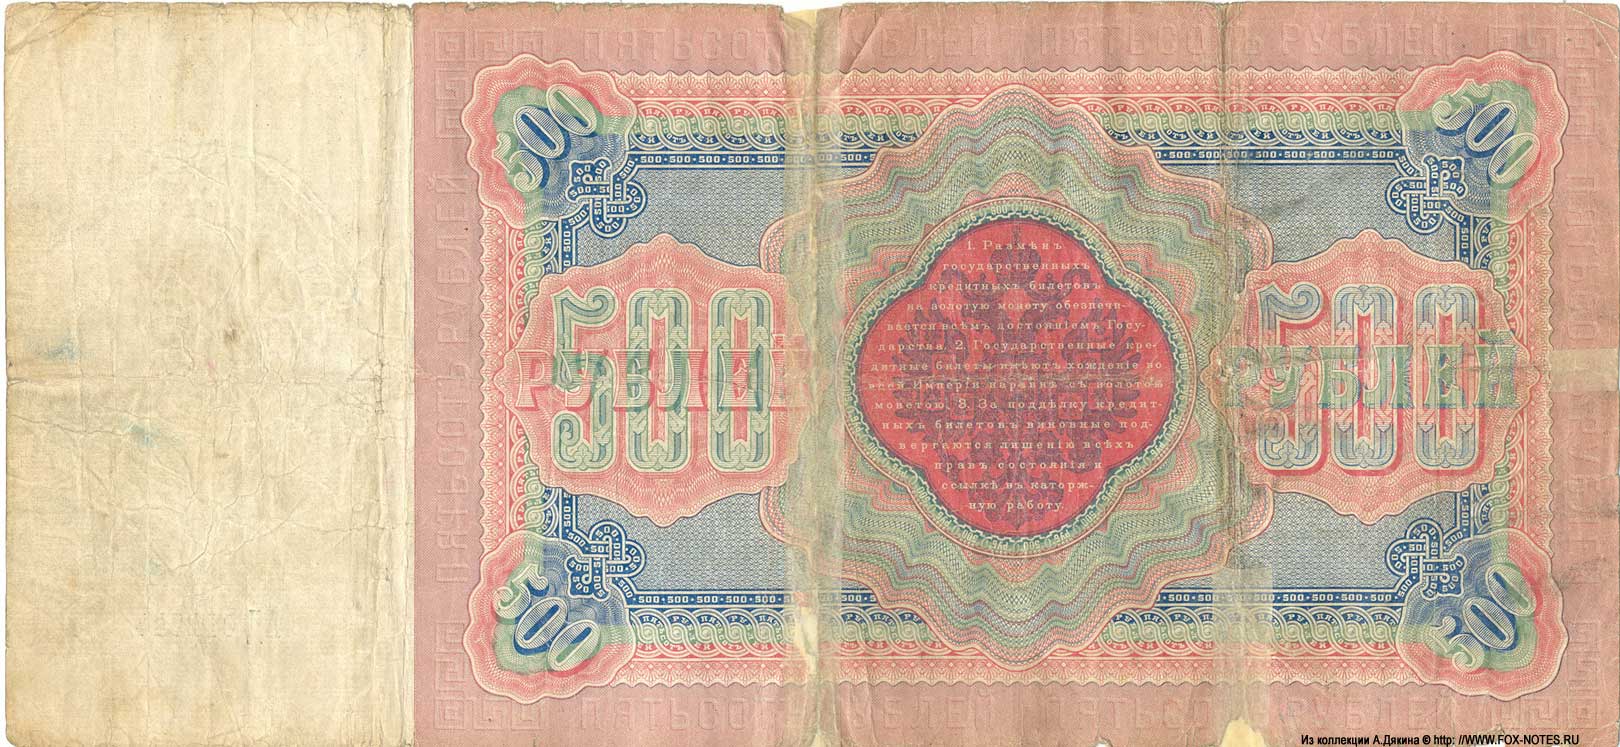 Russian Empire State Credit bank note 500 rubles 1898 / Pleske